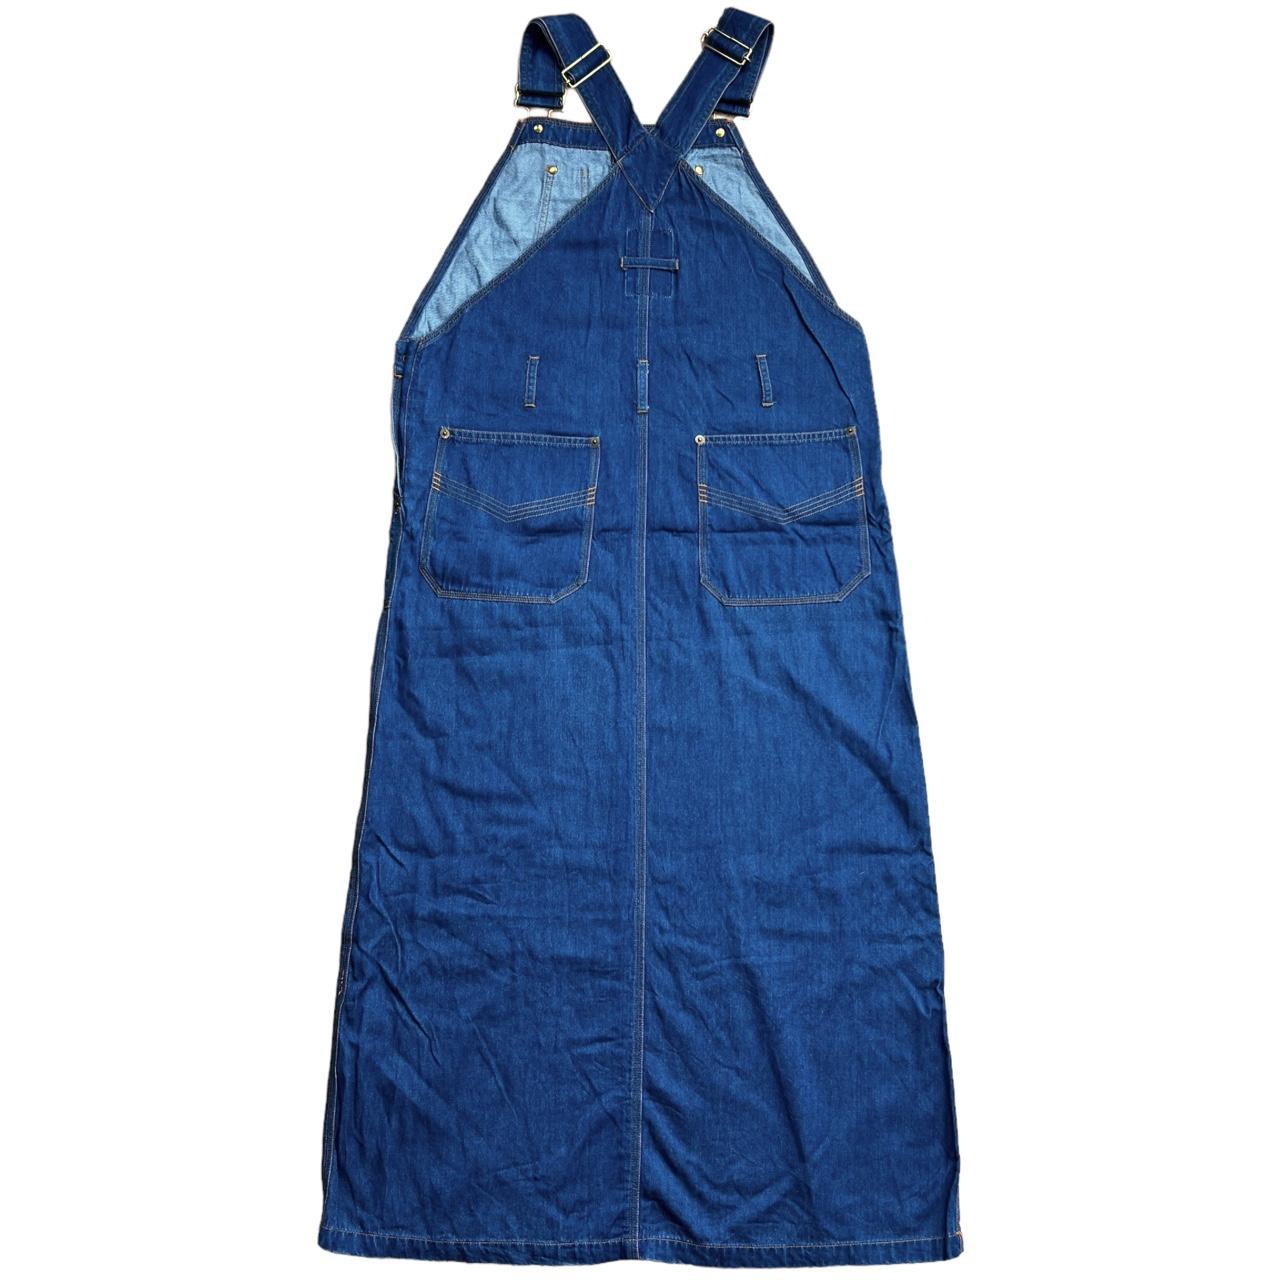 Gaultier Jeans Women's Blue and Navy Dress (3)